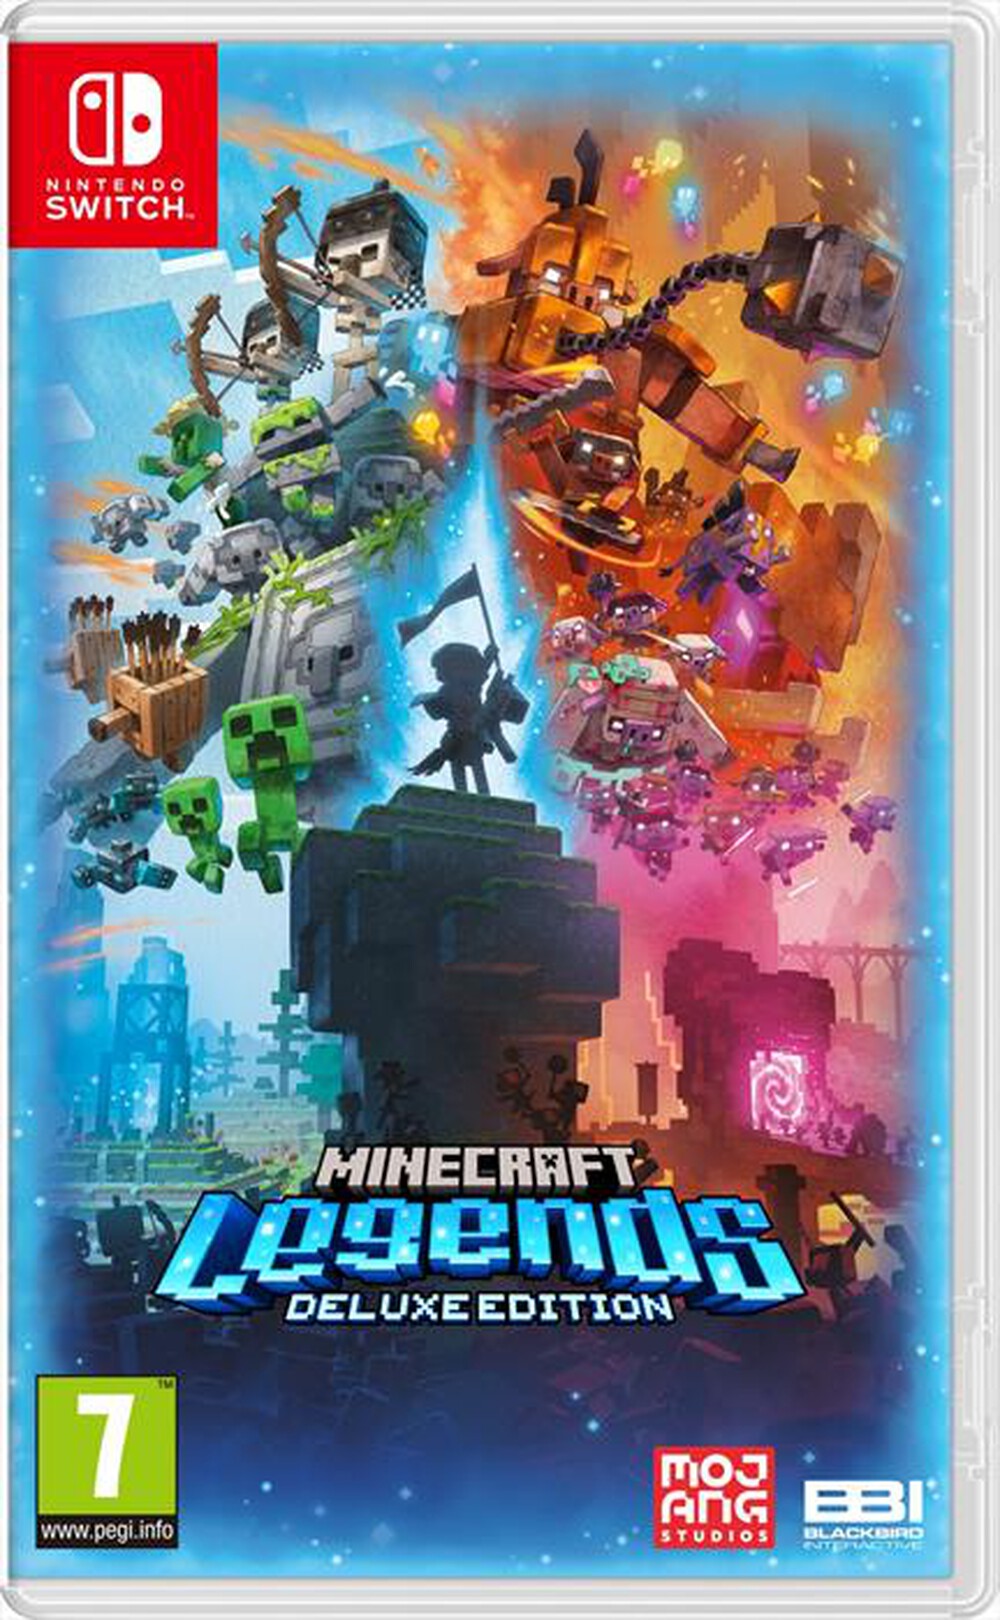 "NINTENDO - Minecraft Legends Deluxe Edition"